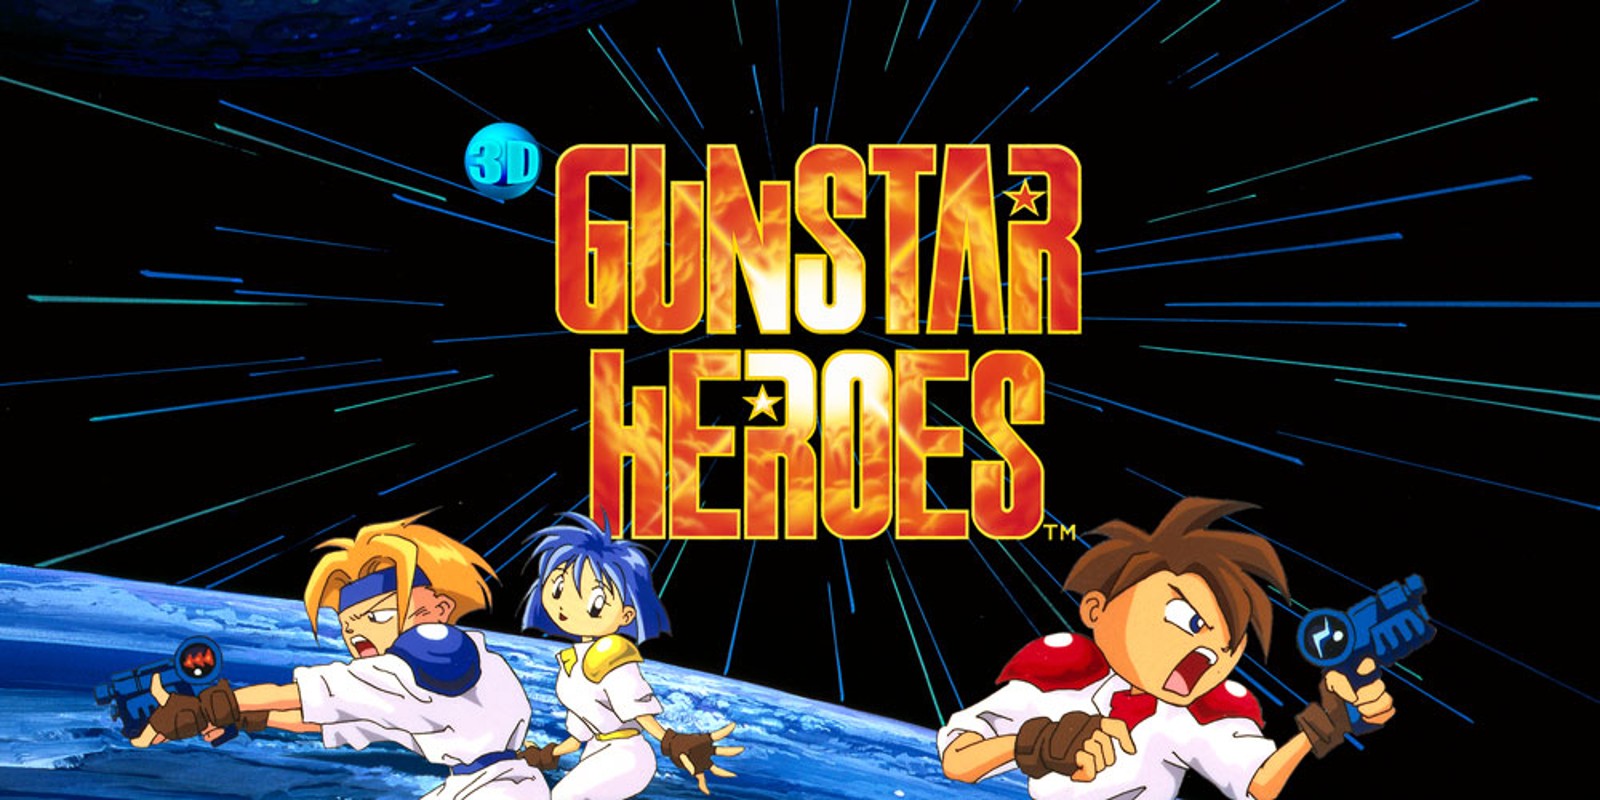 download Gunstar Heroes